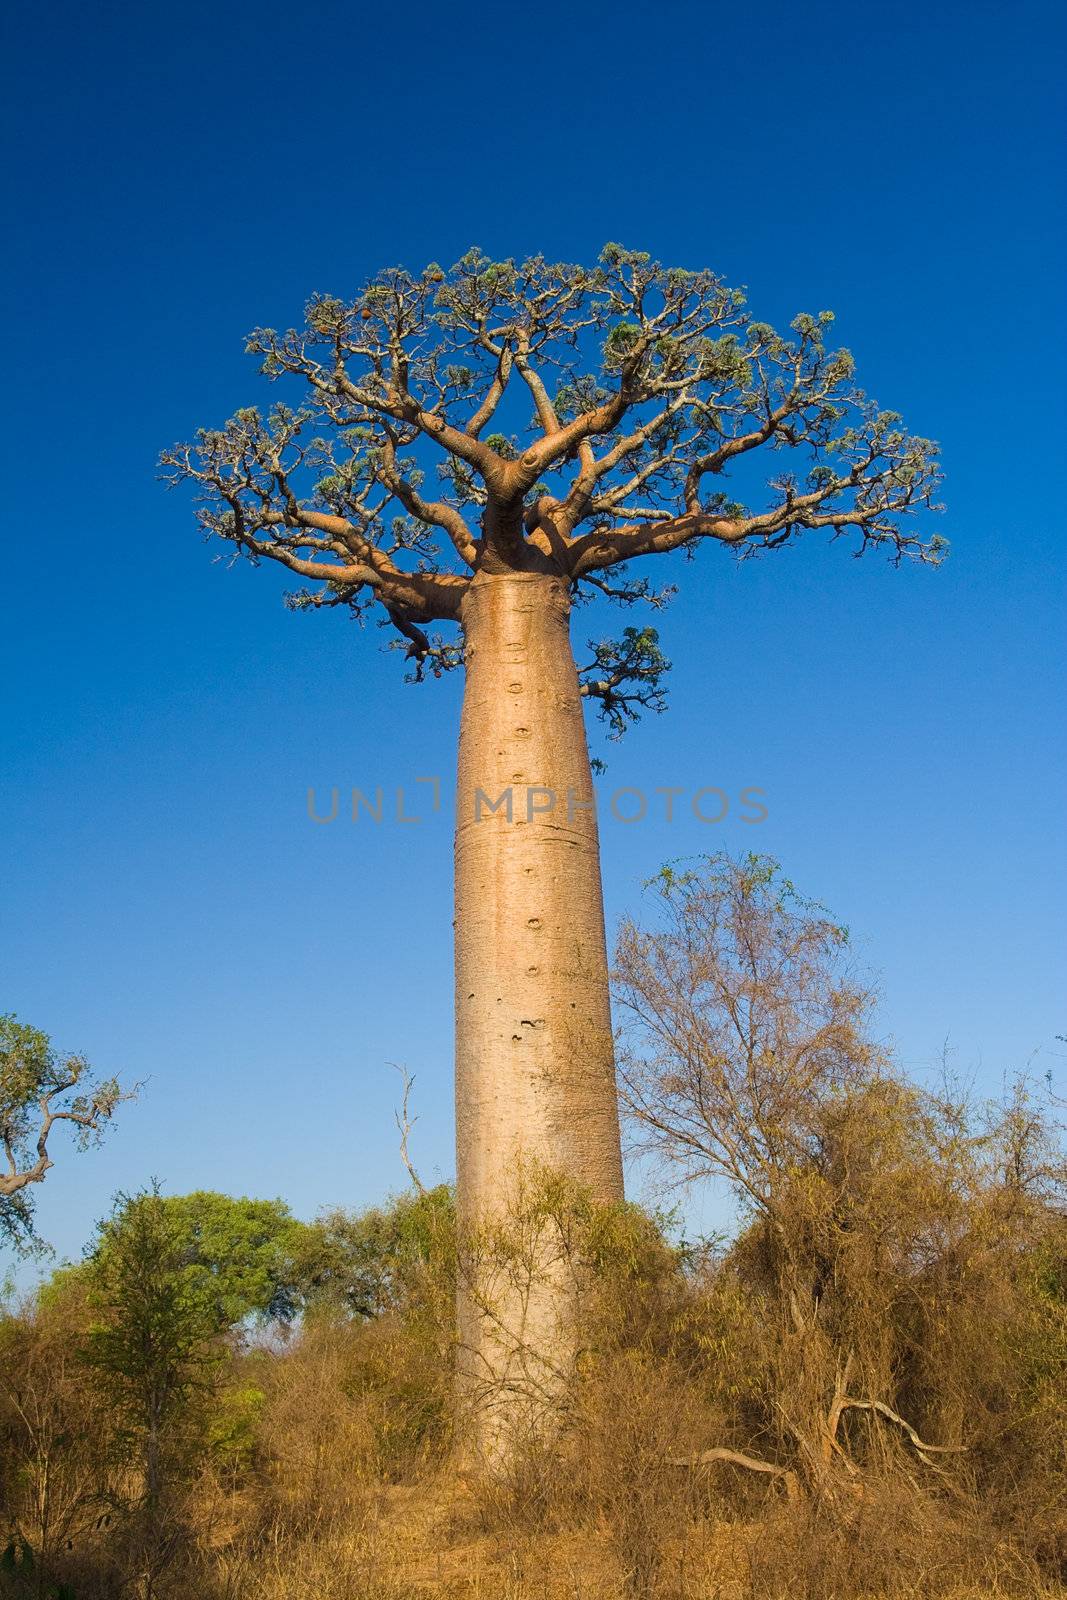 Baobab tree, Madagascar by pierivb